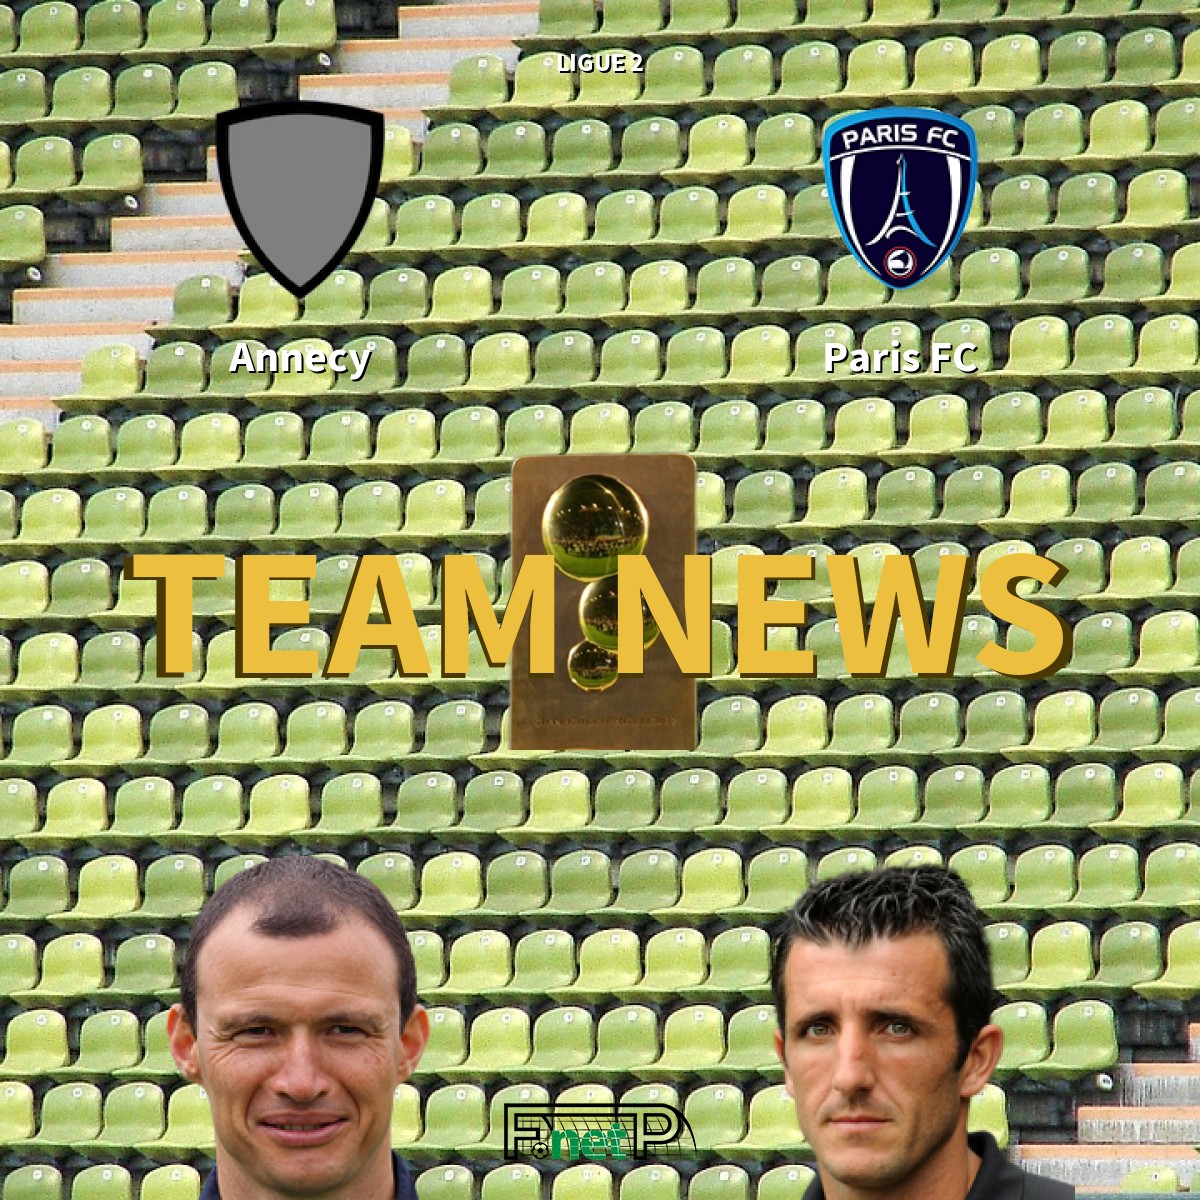 Ligue 2 News: Pau FC vs Annecy FC Confirmed Line-ups